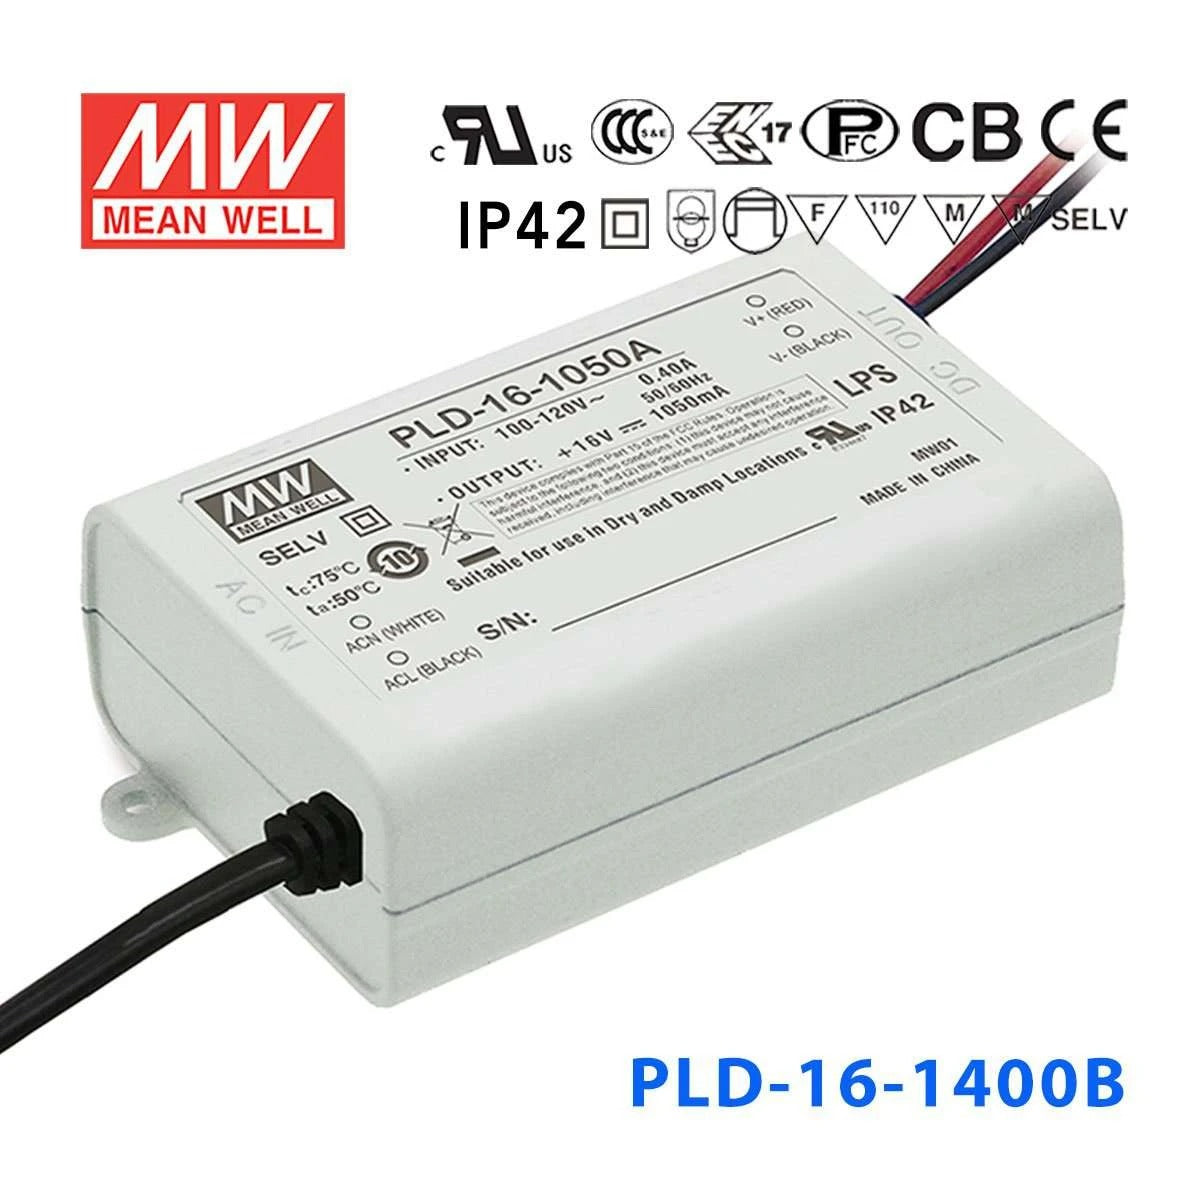 Mean Well PLD-16-1400B Power Supply 16W 1400mA